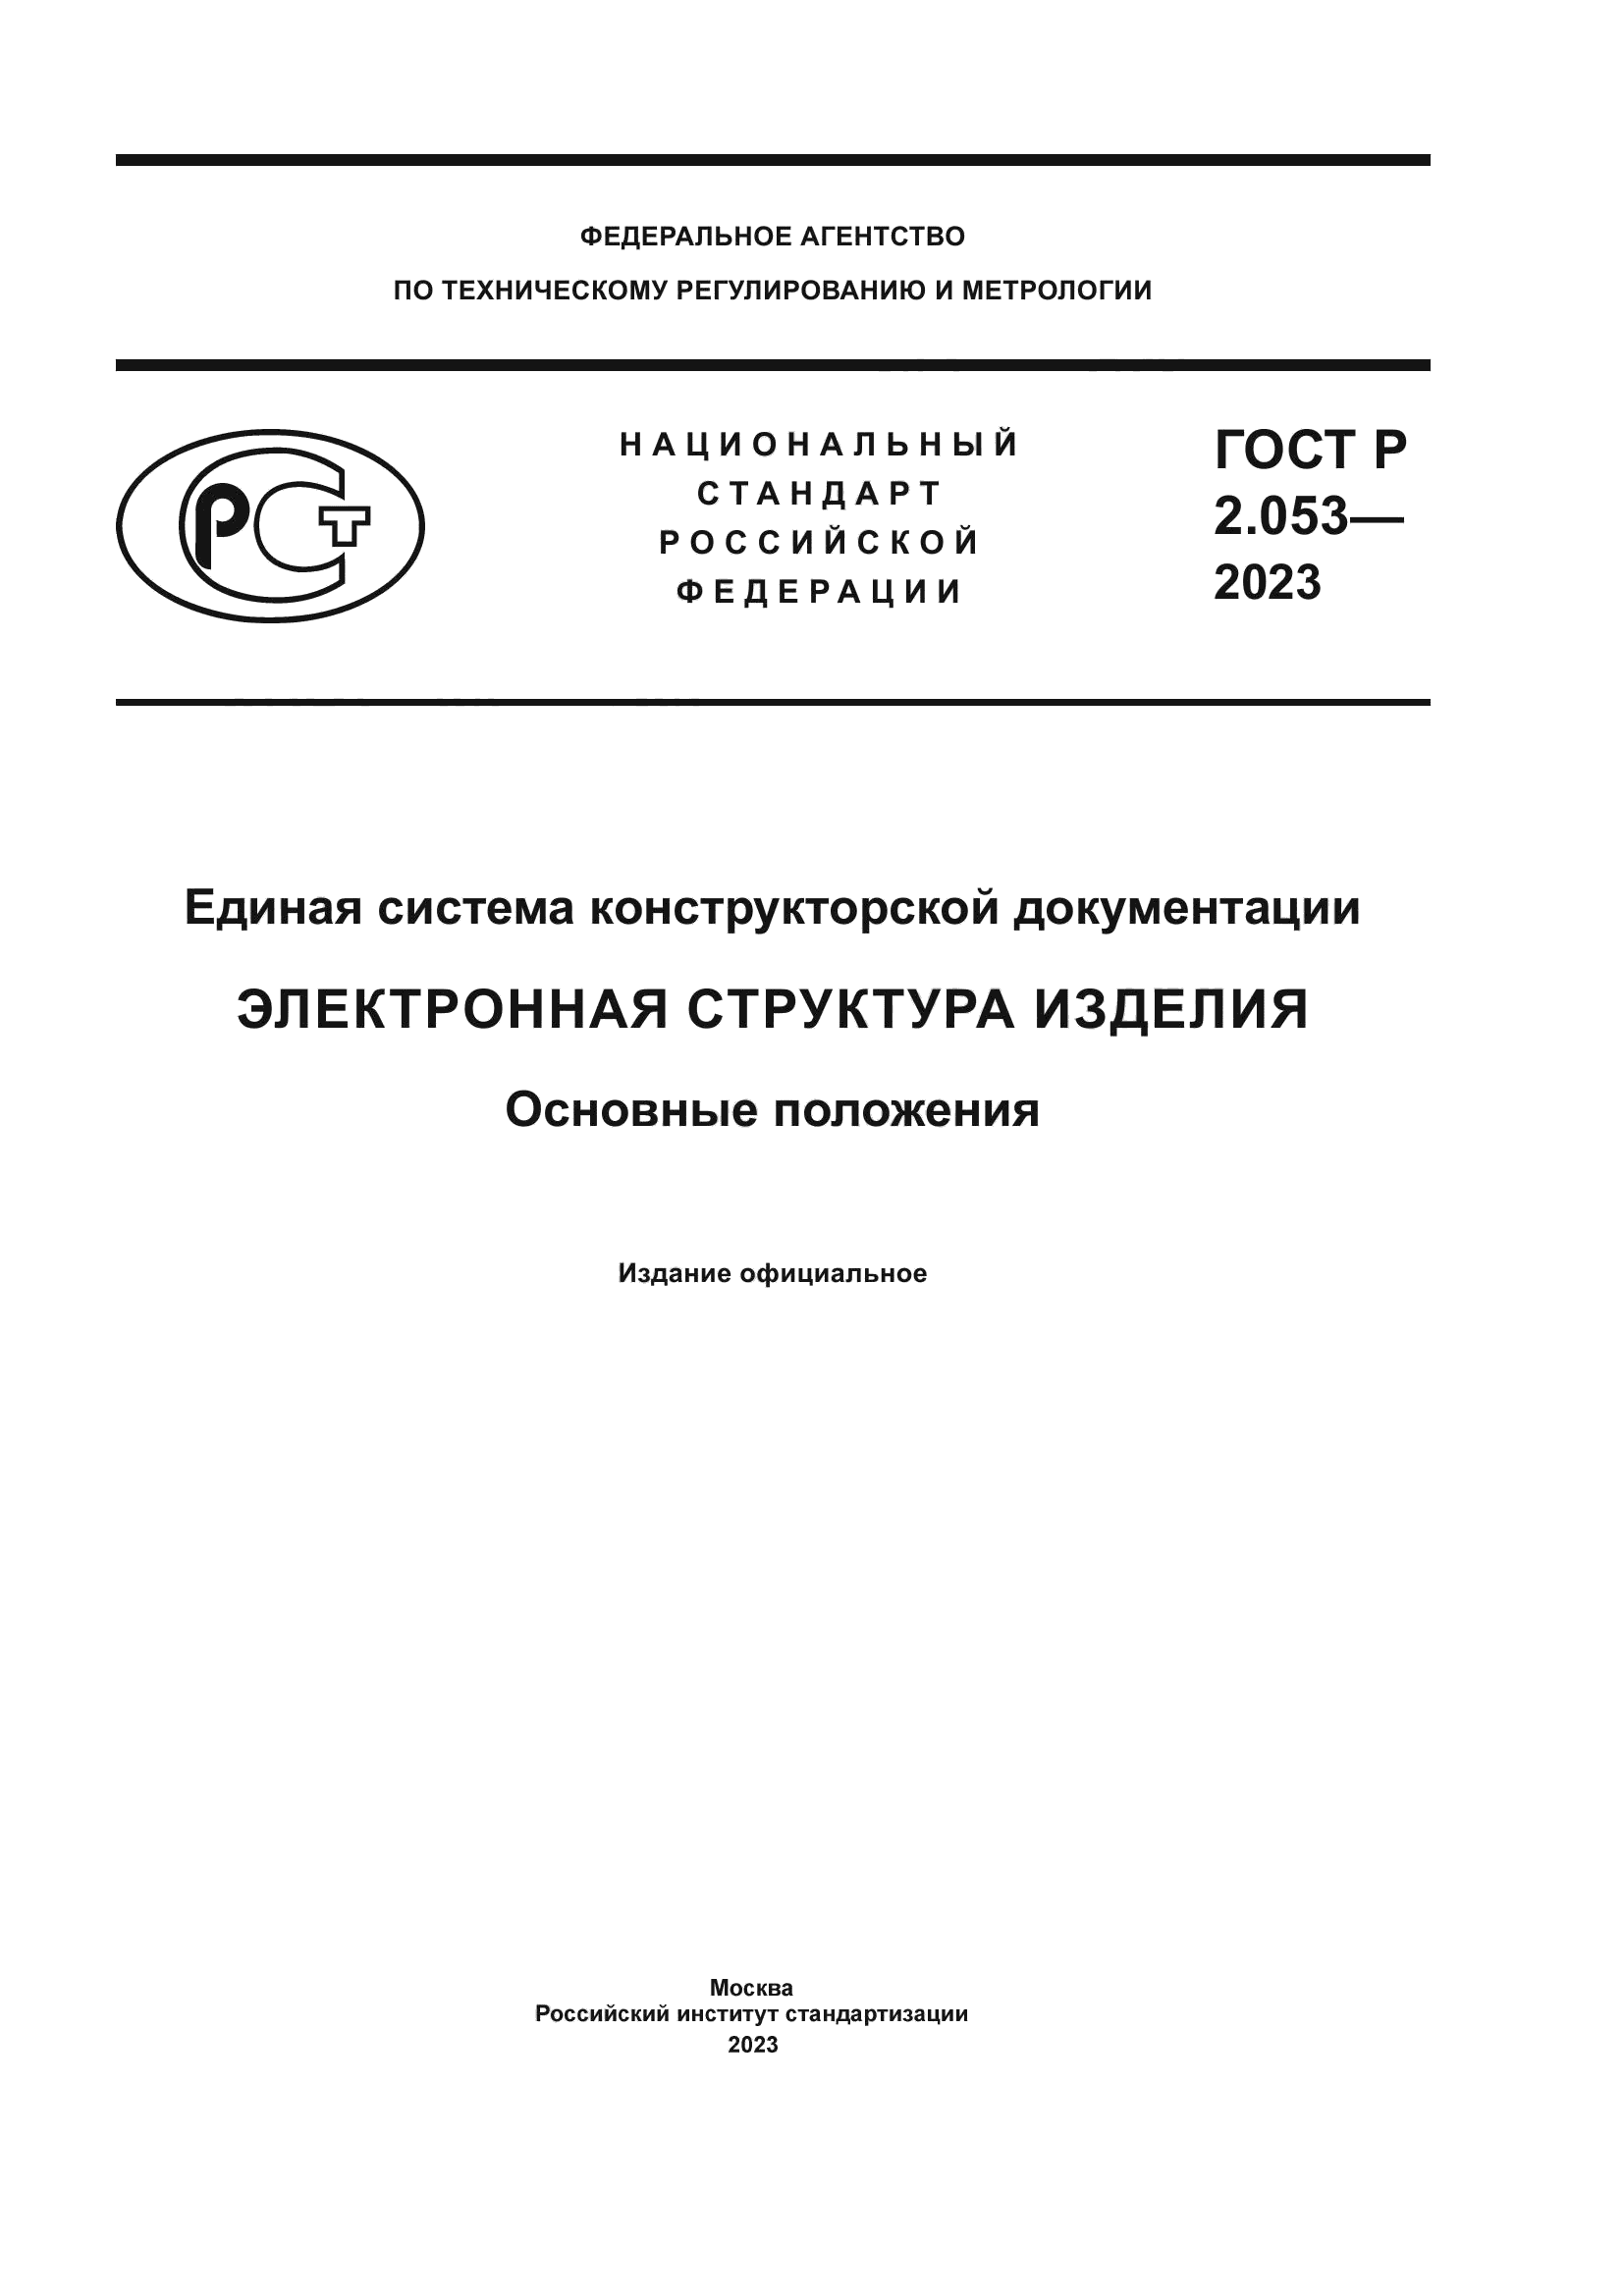 ГОСТ Р 2.053-2023